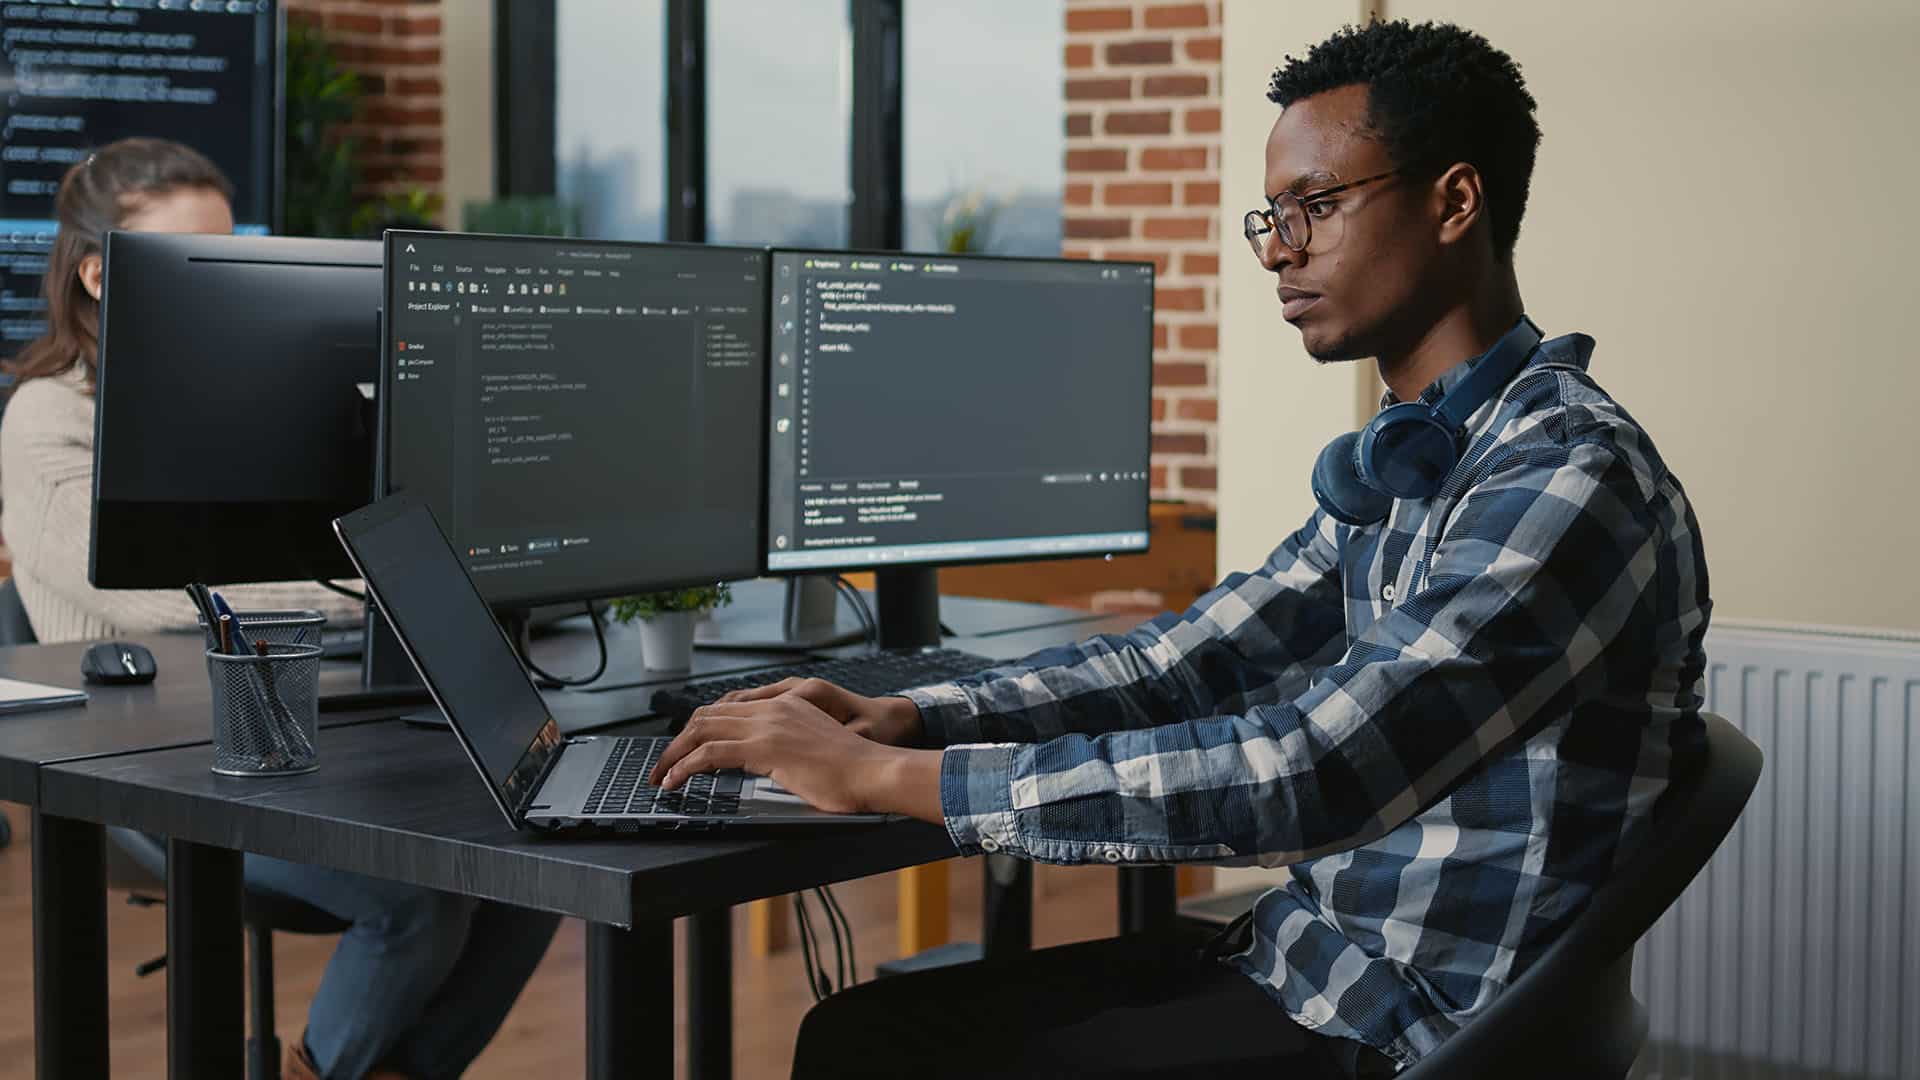 Programer working on laptop while coding on desktop monitors